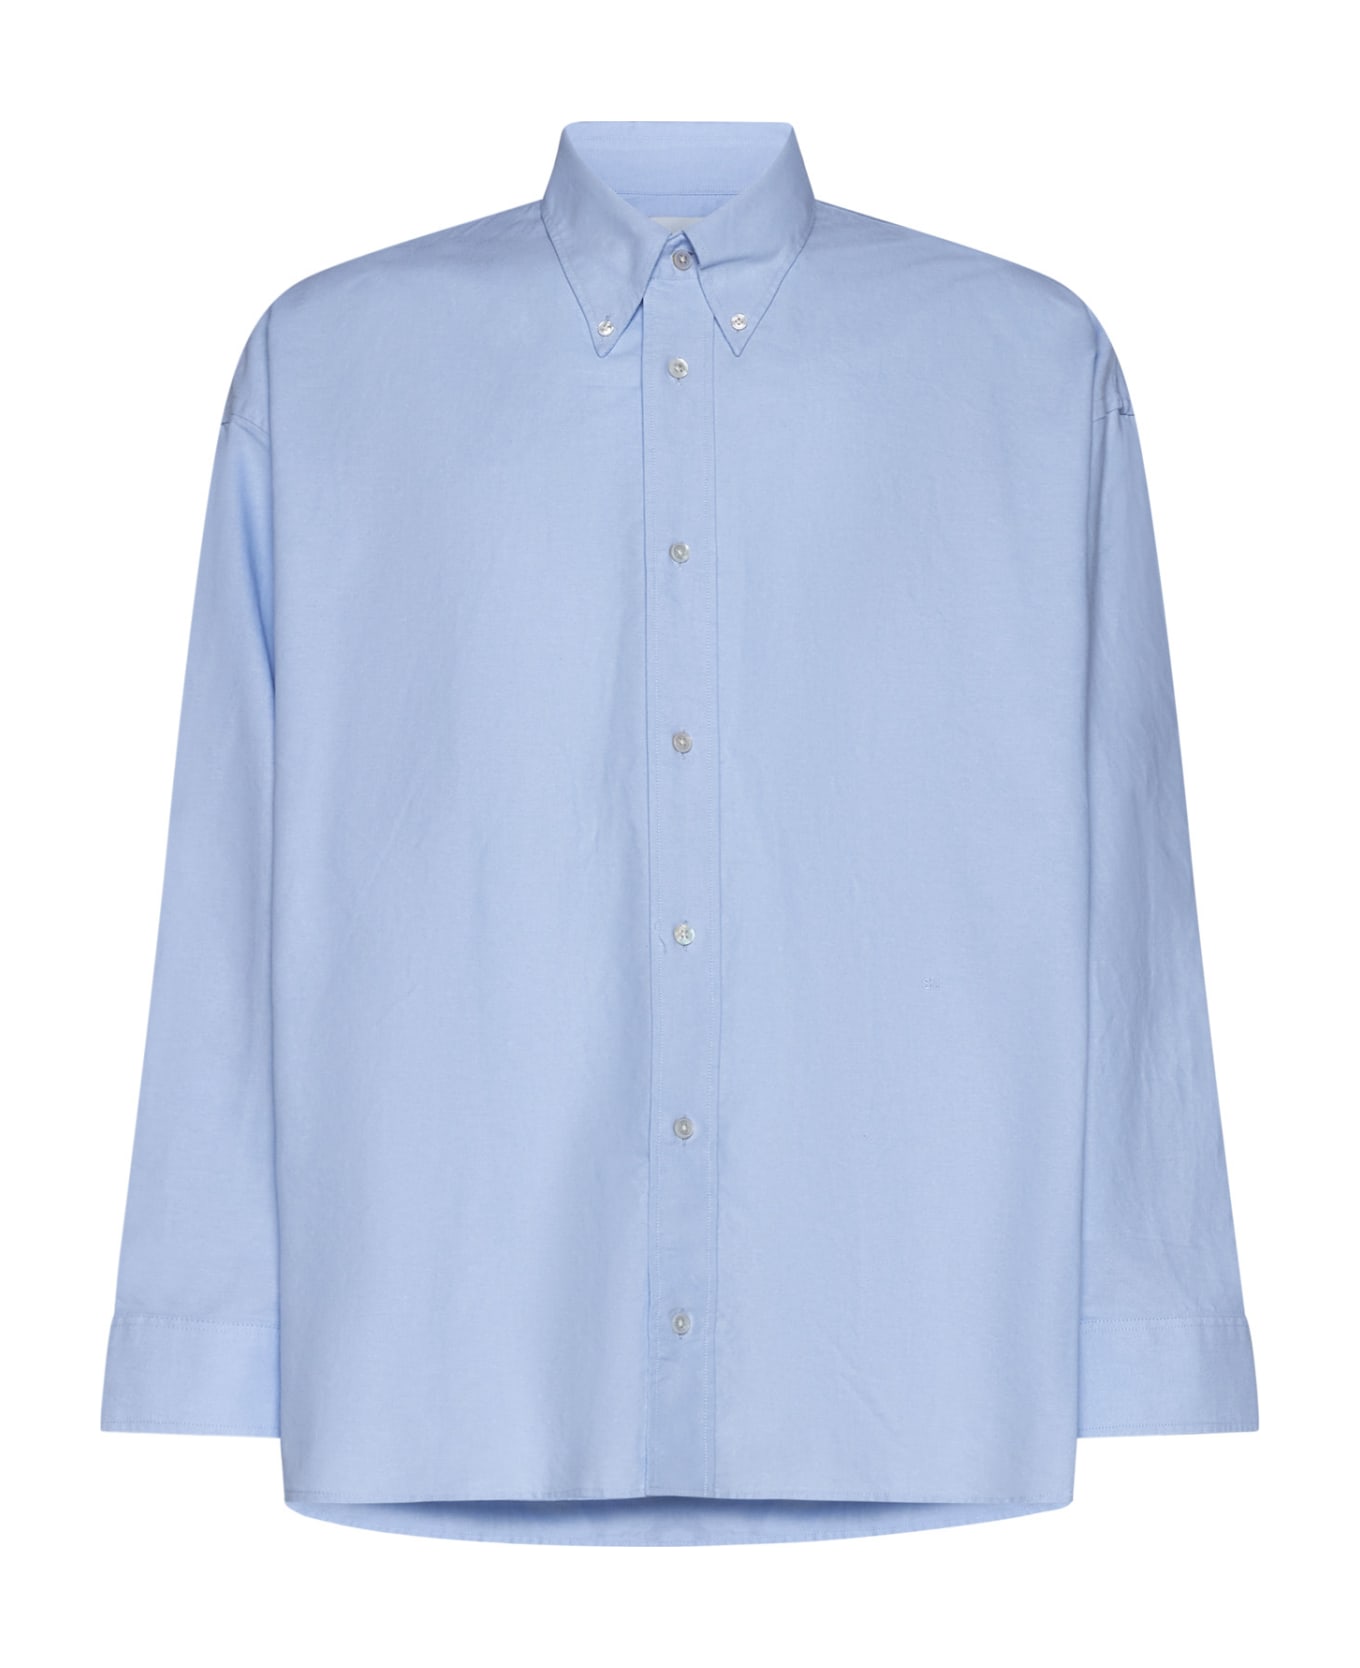 Studio Nicholson Shirt - Oxford blue